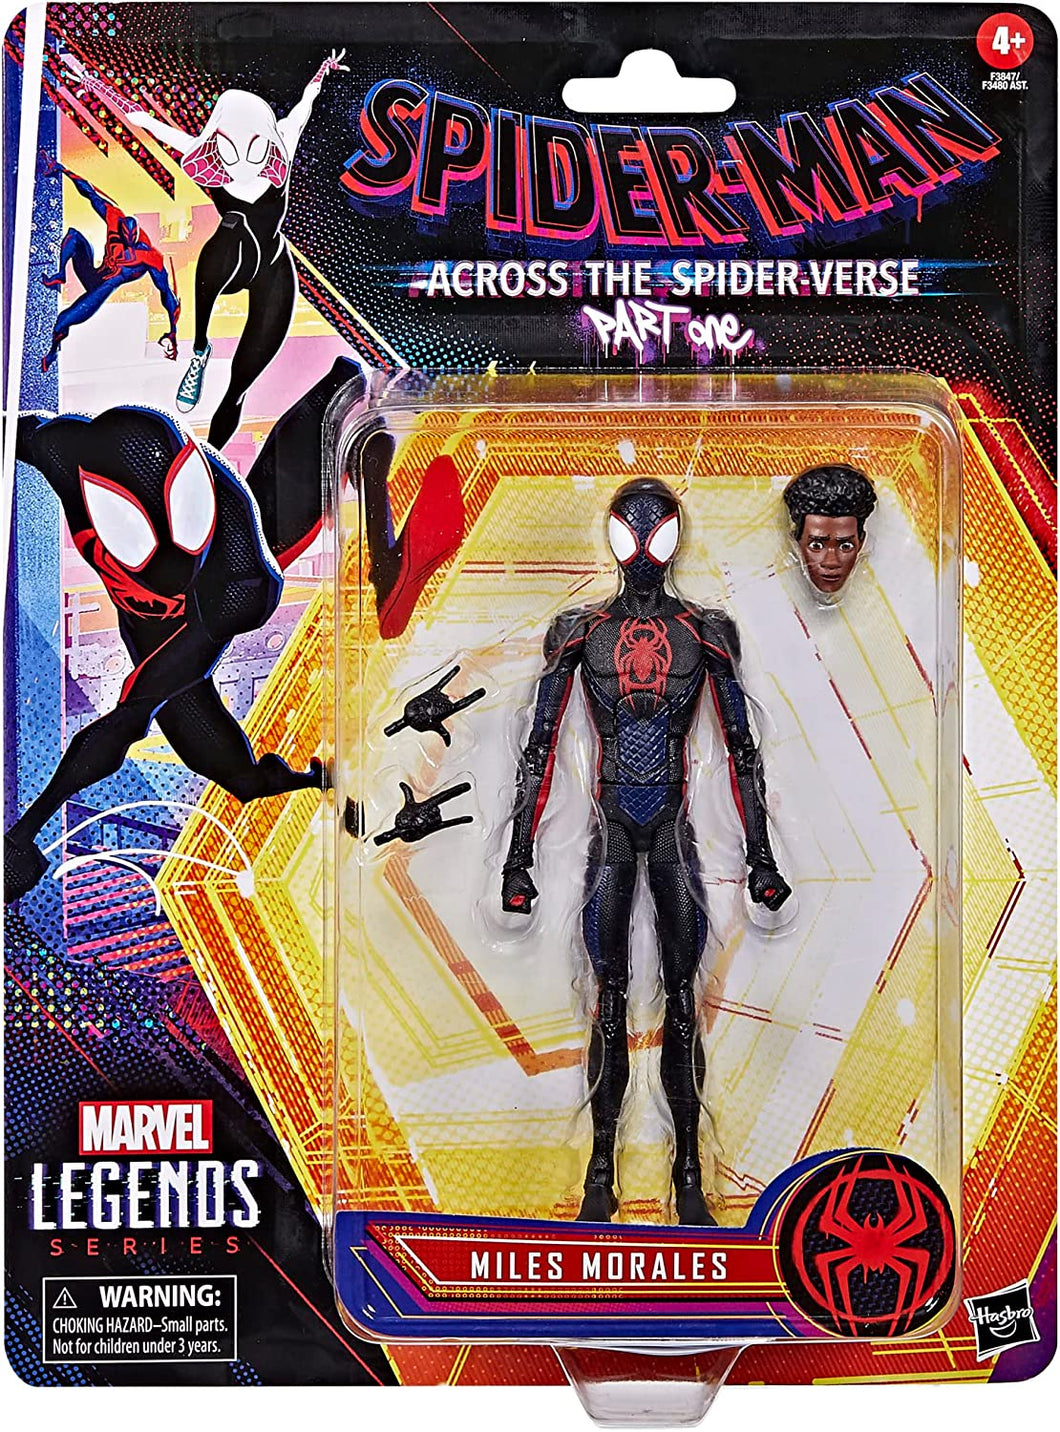 Marvel Legends Series Spider-Man Across the Spider-Verse - Miles Morales